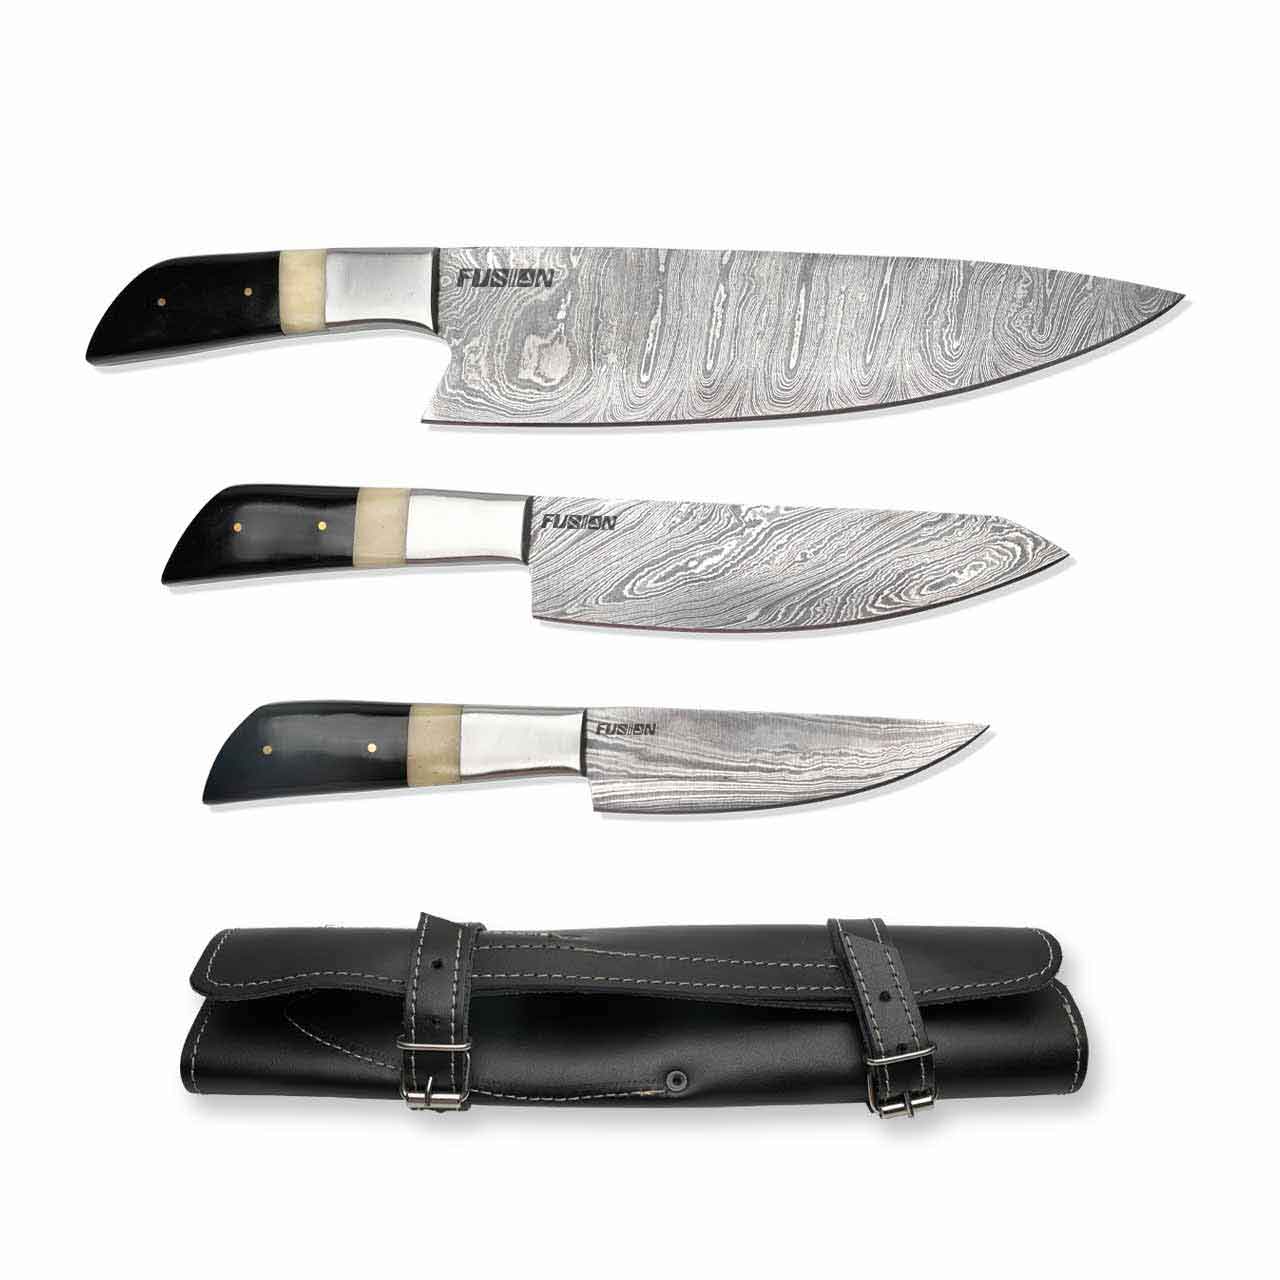 Damascus Steel Chef Knives Set Best kitchen knives set